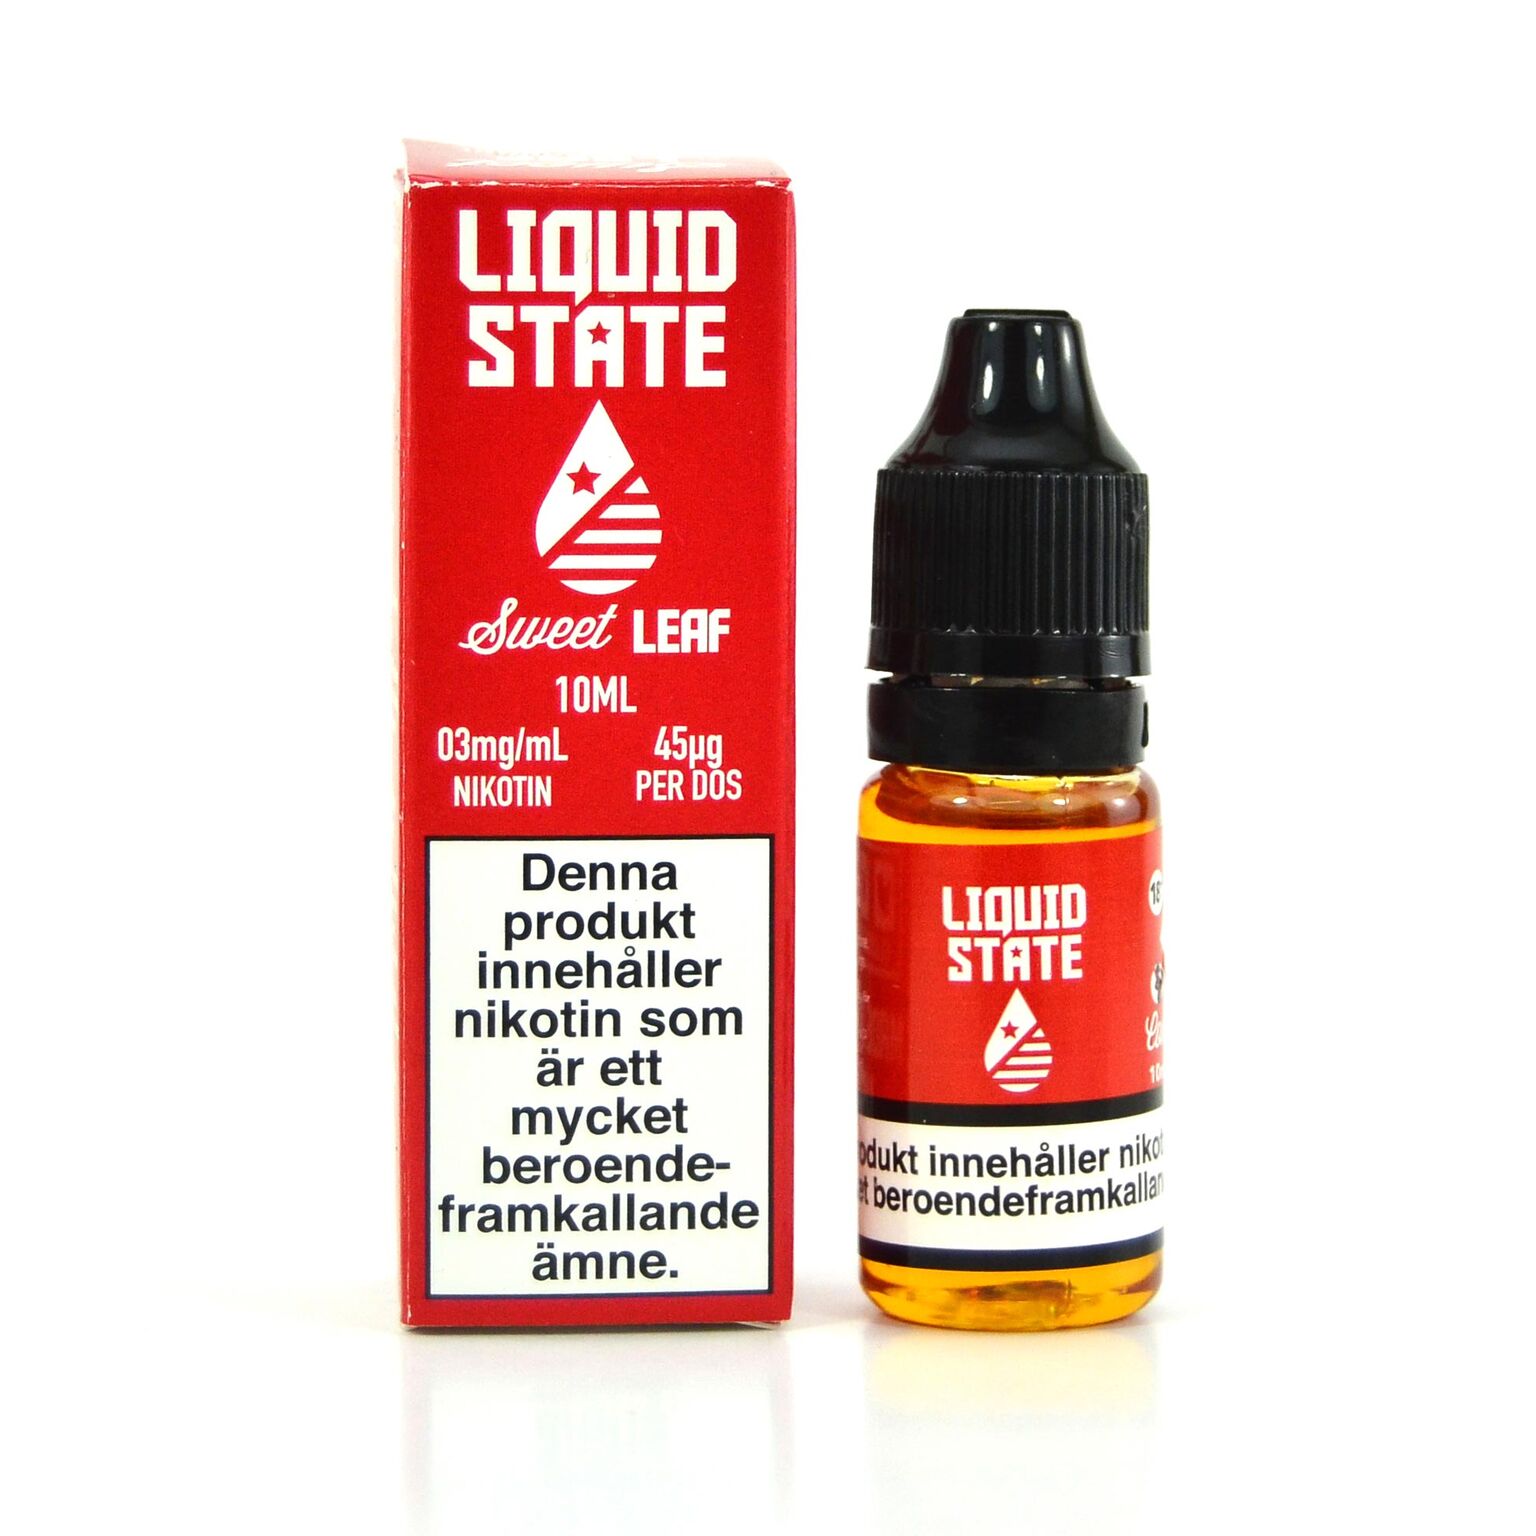 Liquid State Sweet Leaf e-juice with nicotine